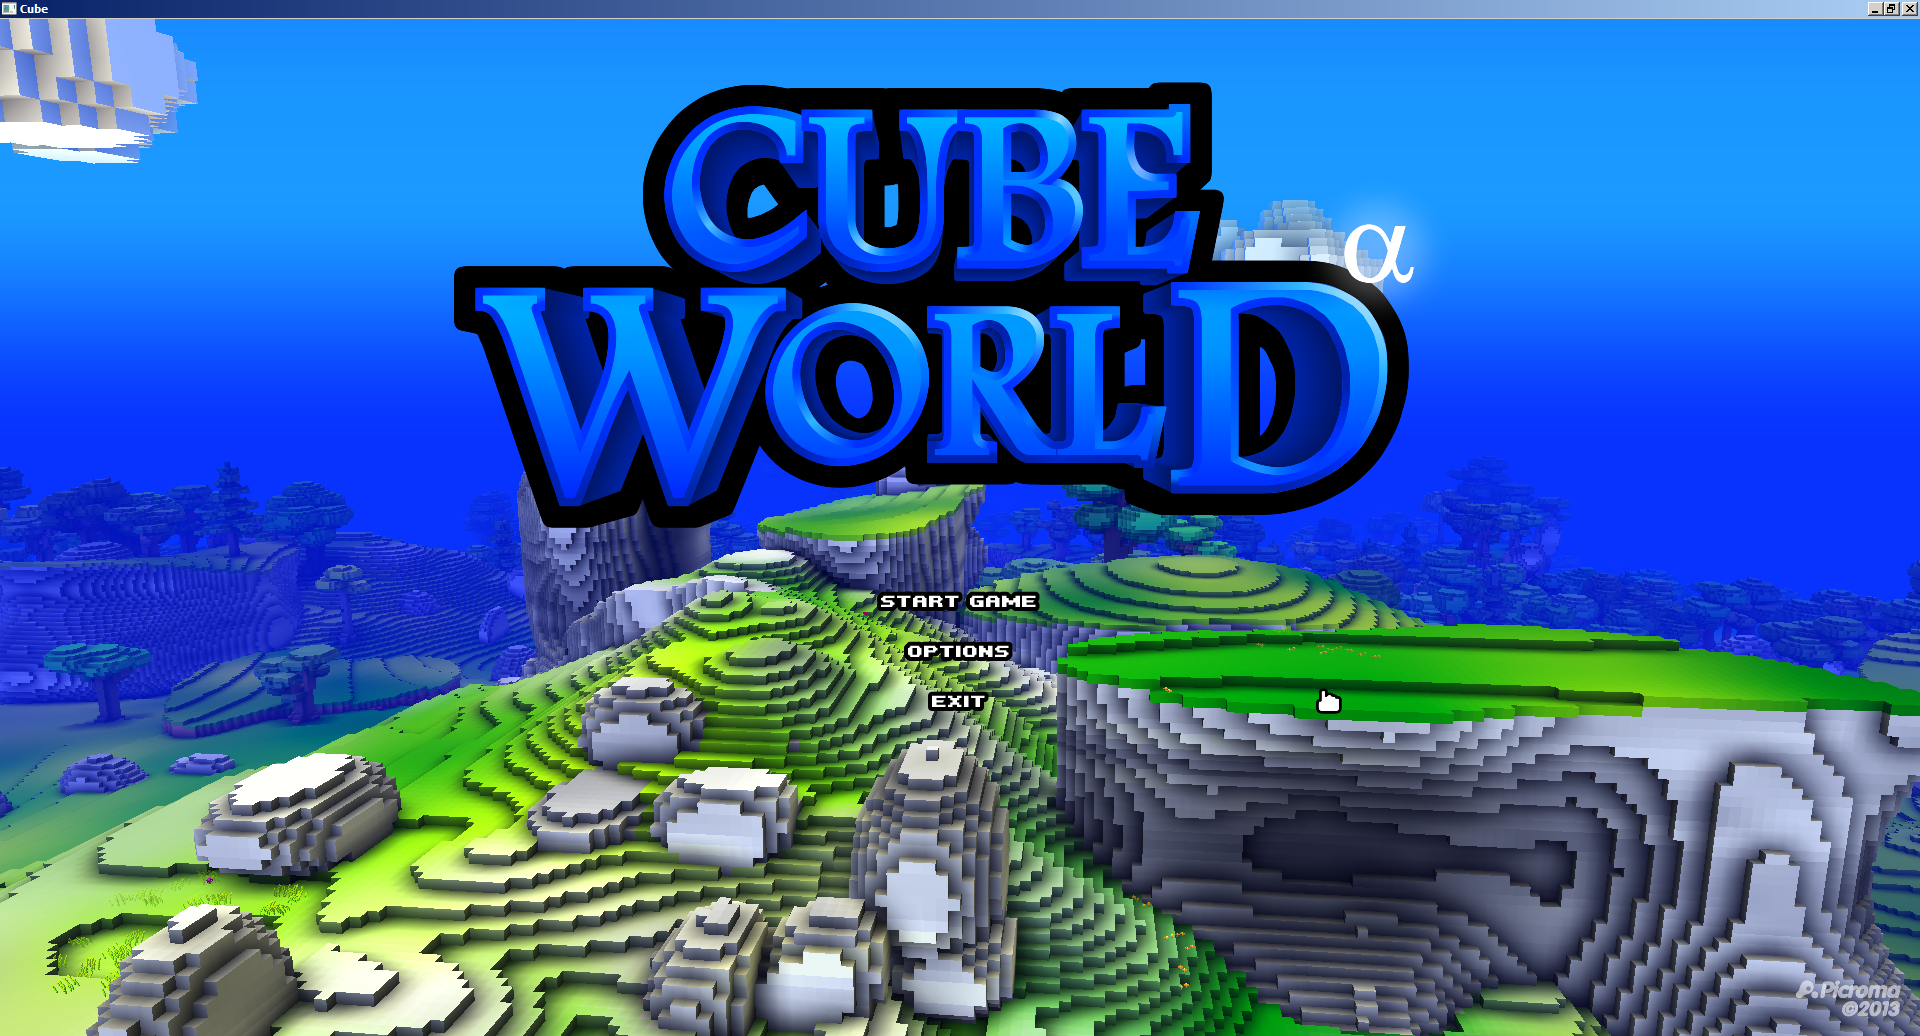 Cube World's normal logo